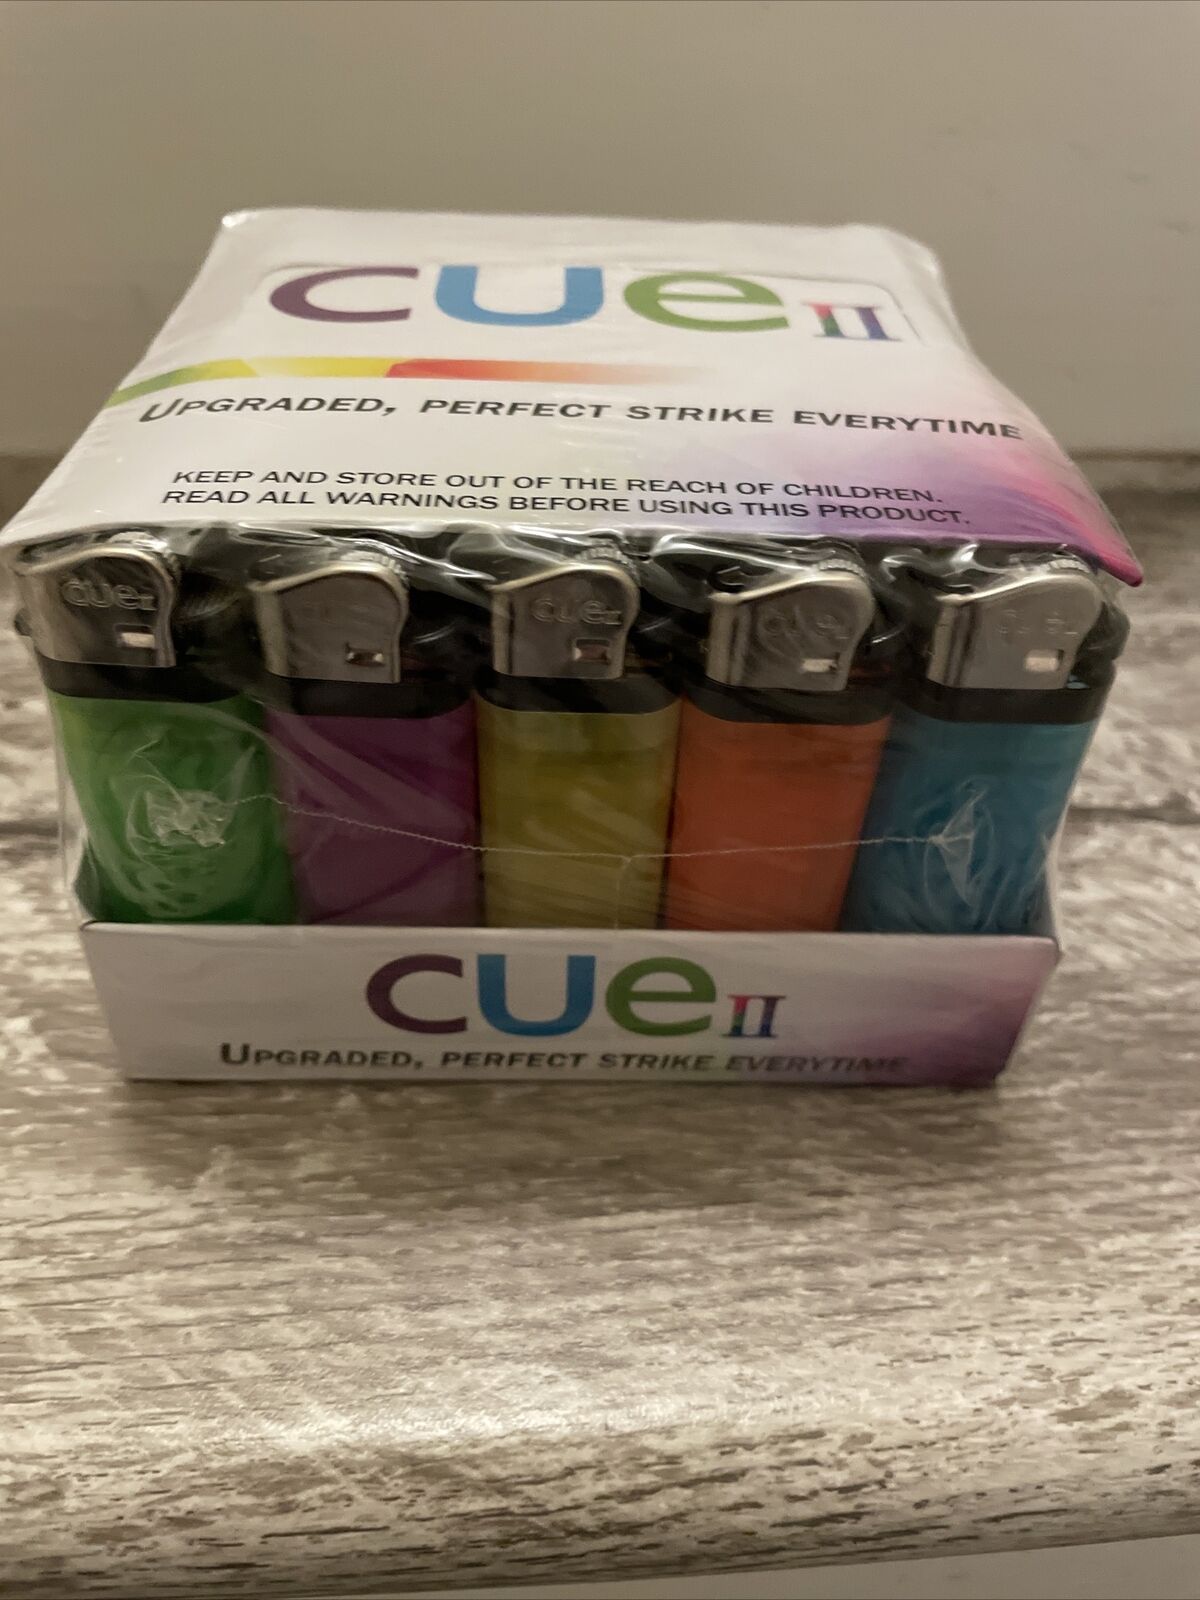 50 Count CUE II Classic Lighters, Retail Wholesale Bulk, Assorted Colors 